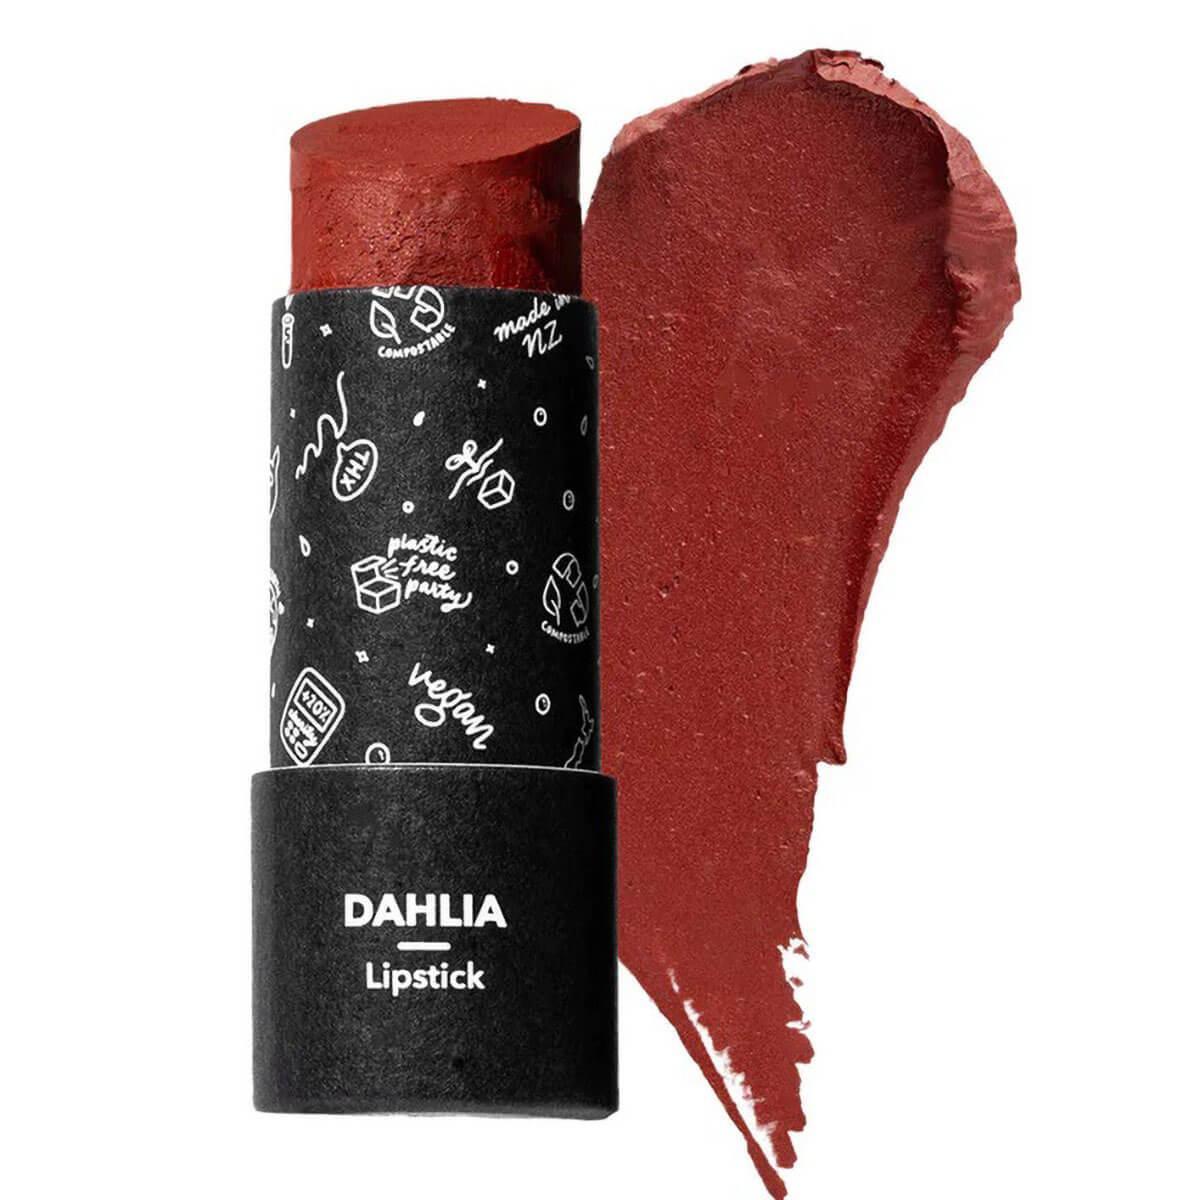 Dahlia Terracotta Brown Lipstick - 8g - Ethique